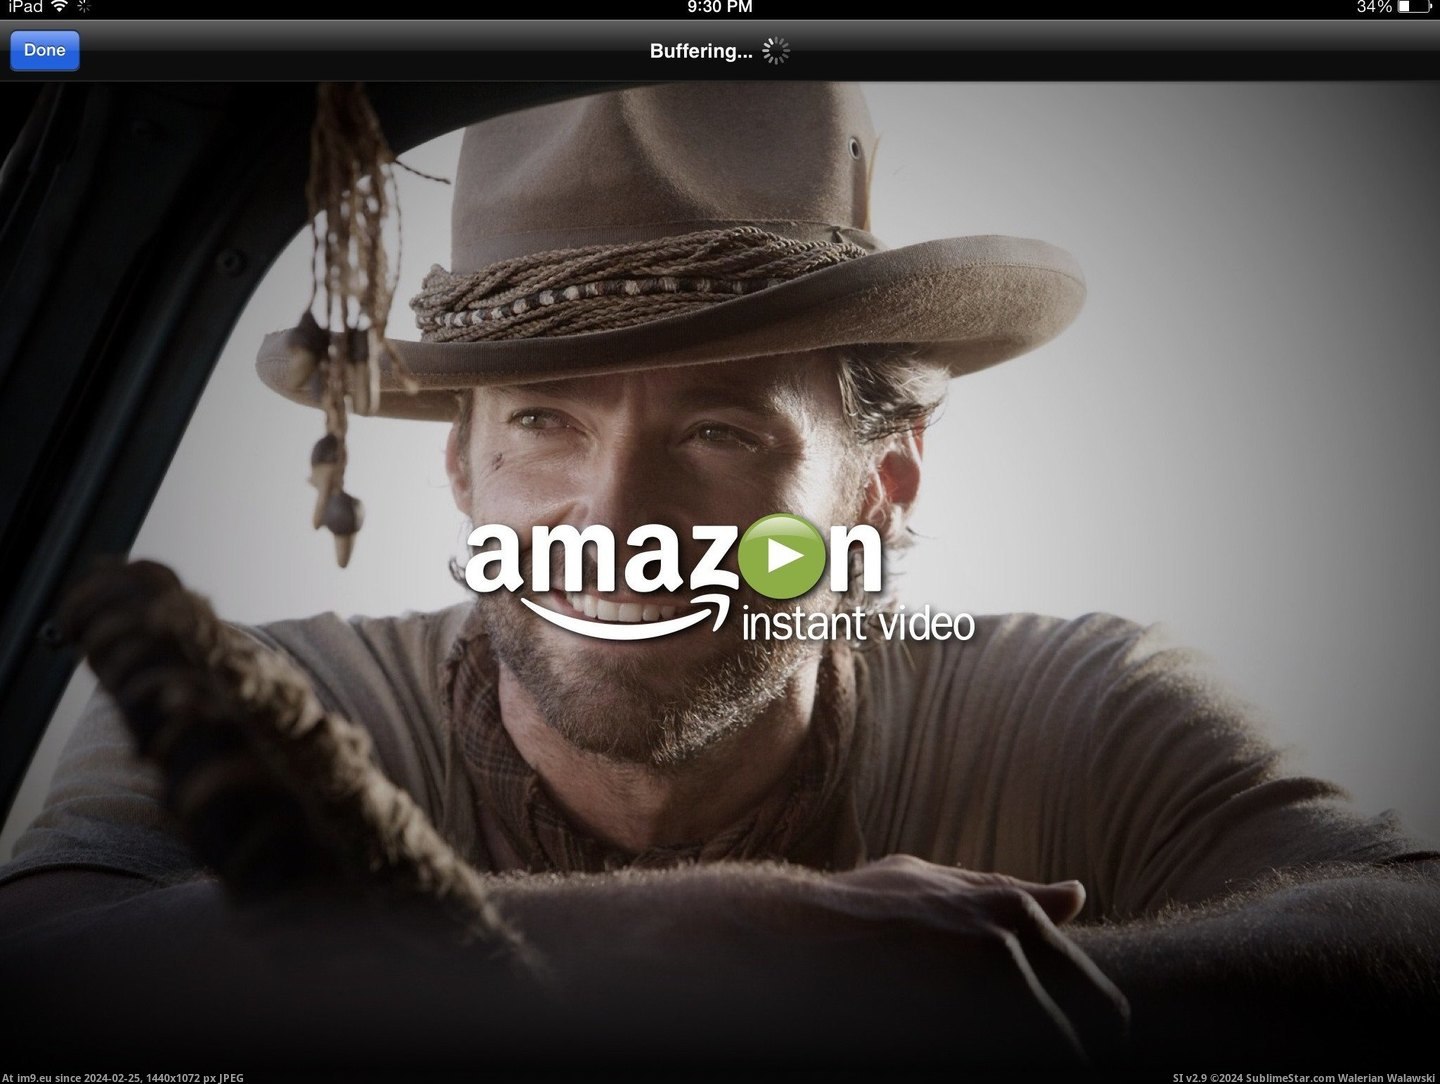 #Smile #Amazon #Jackman #Overlapped #Hugh #Loading [Mildlyinteresting] The Amazon 'smile' overlapped with Hugh Jackman's smile when loading Pic. (Image of album My r/MILDLYINTERESTING favs))